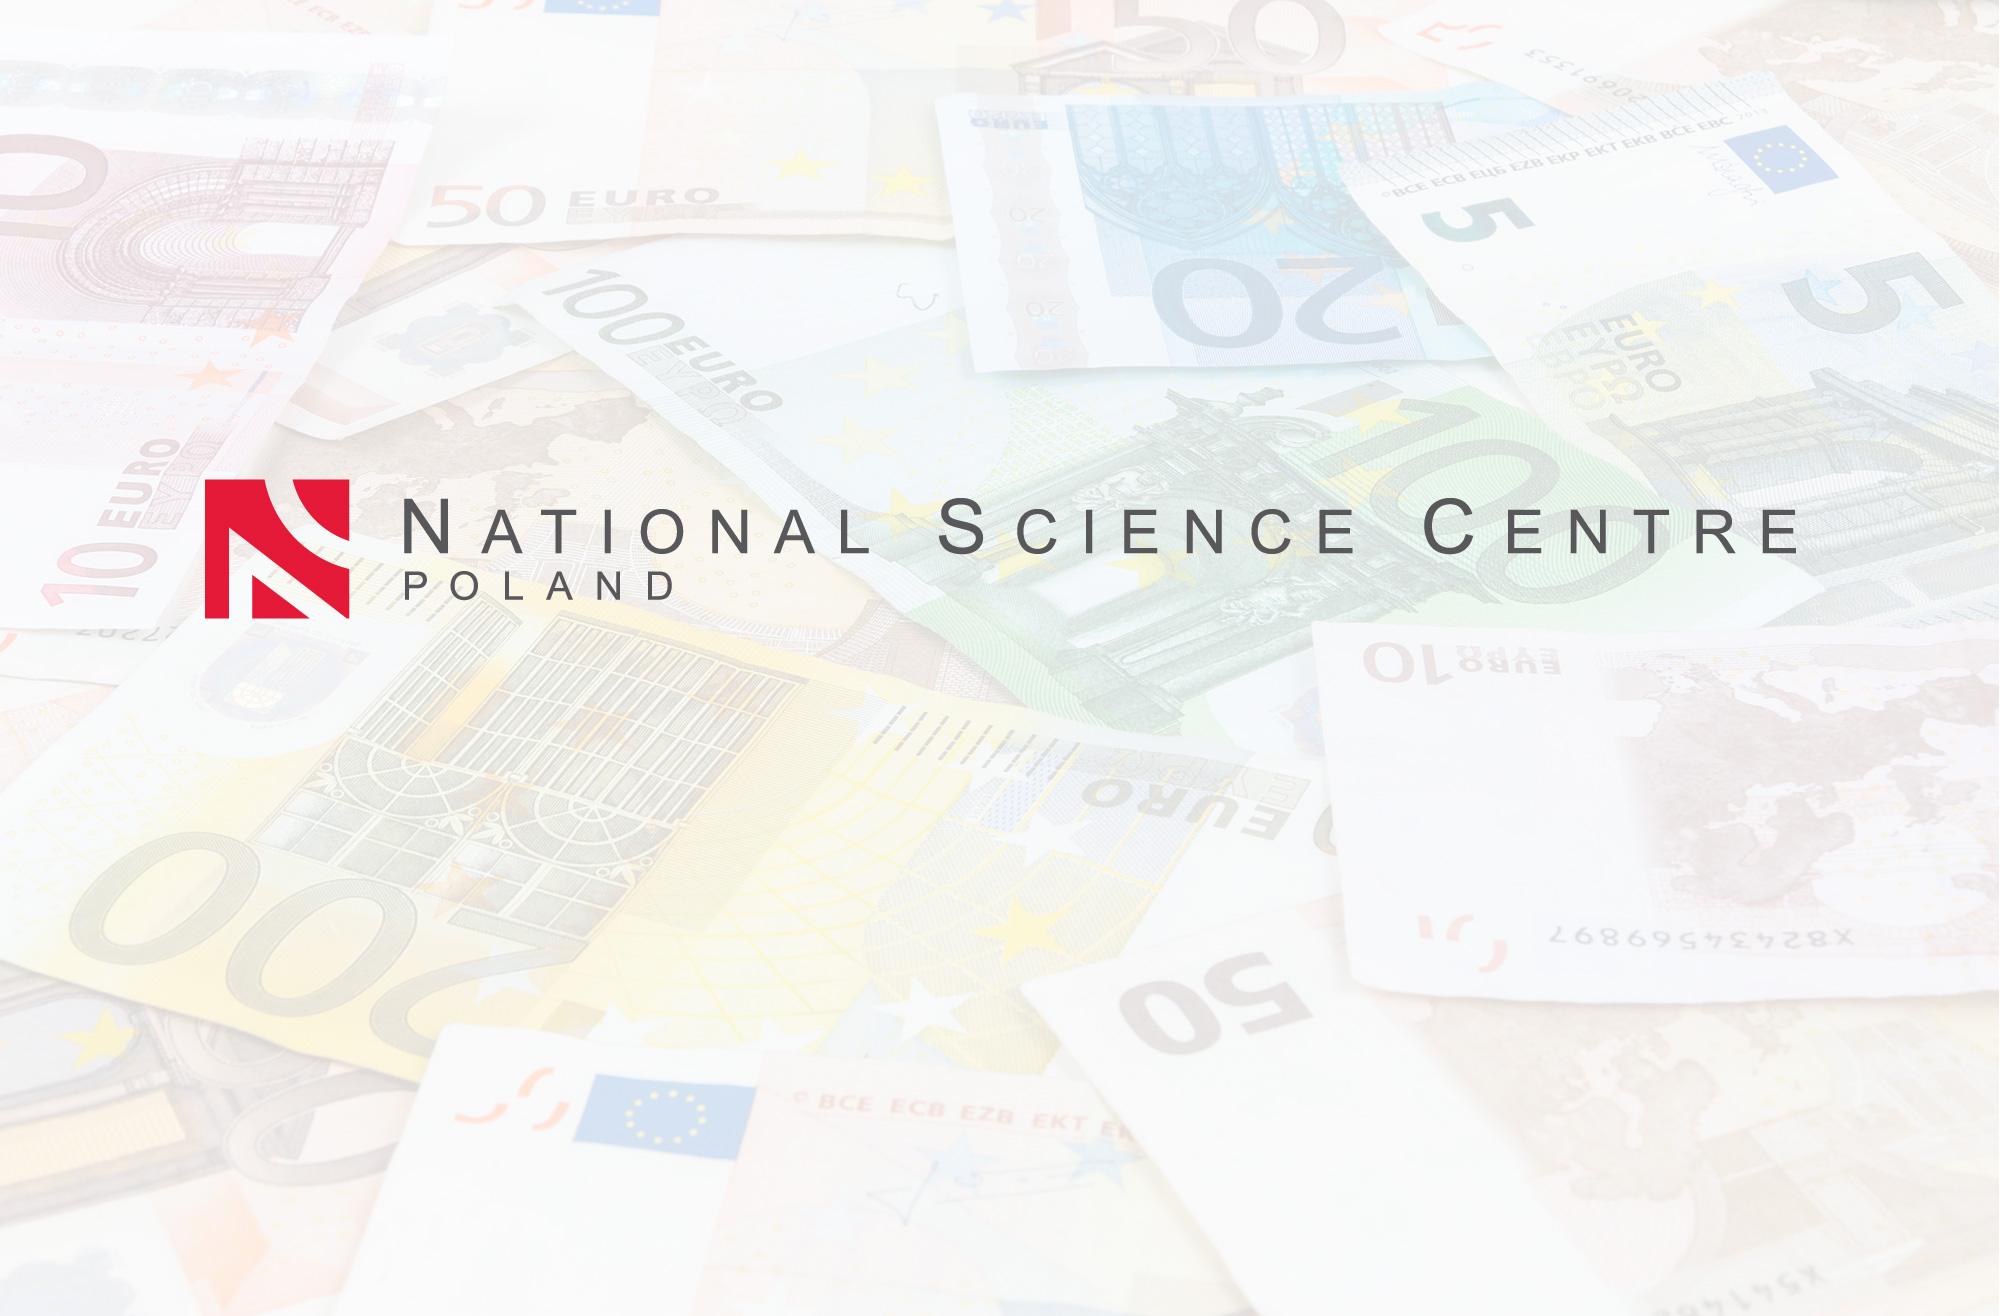 SWPS University Receives PLN 1.3M in Research Grants from NCN